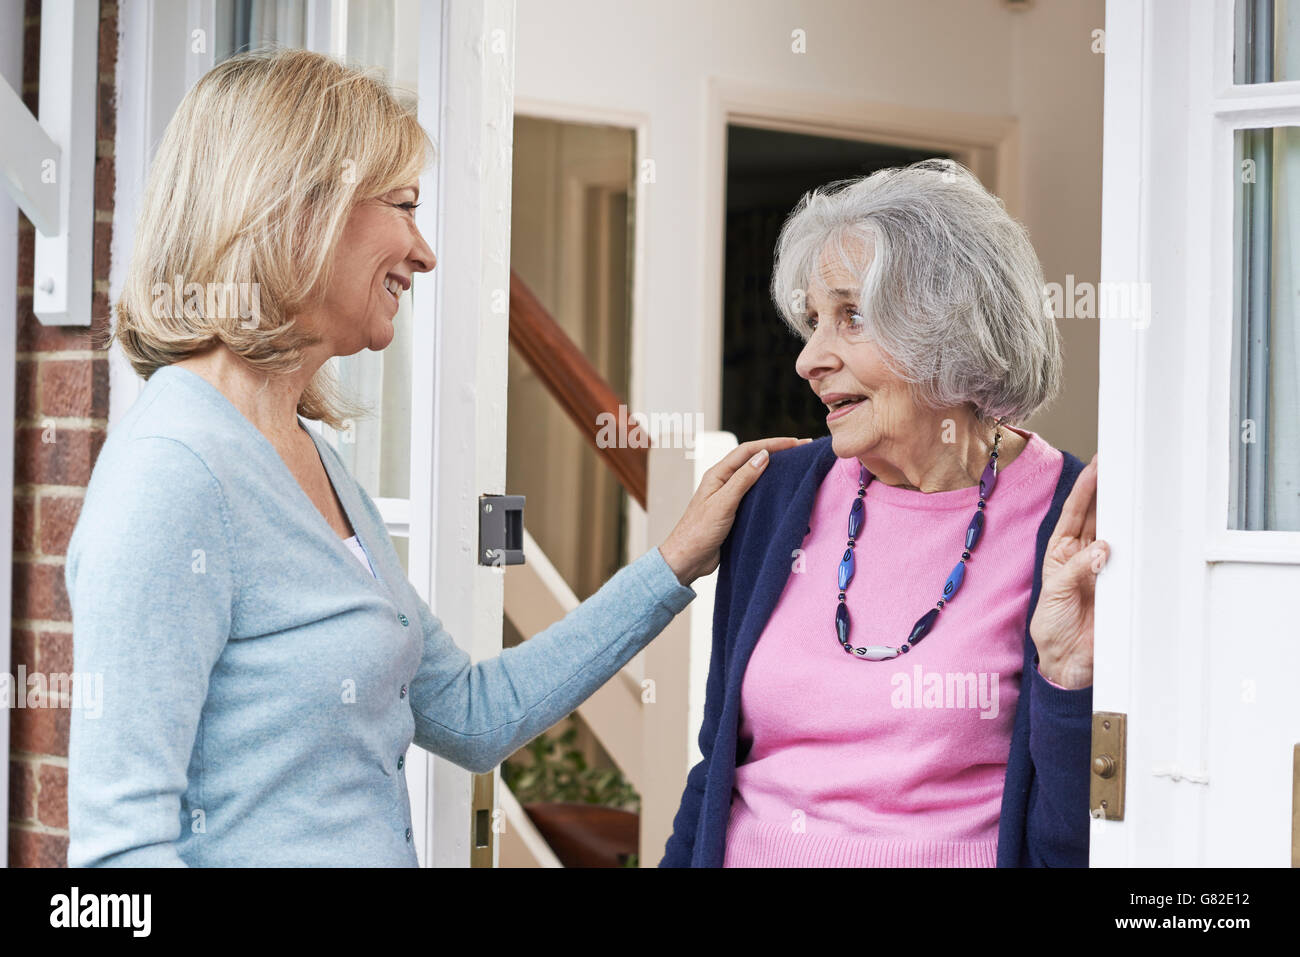 Woman Checking On Elderly Female Neighbor Stock Photo